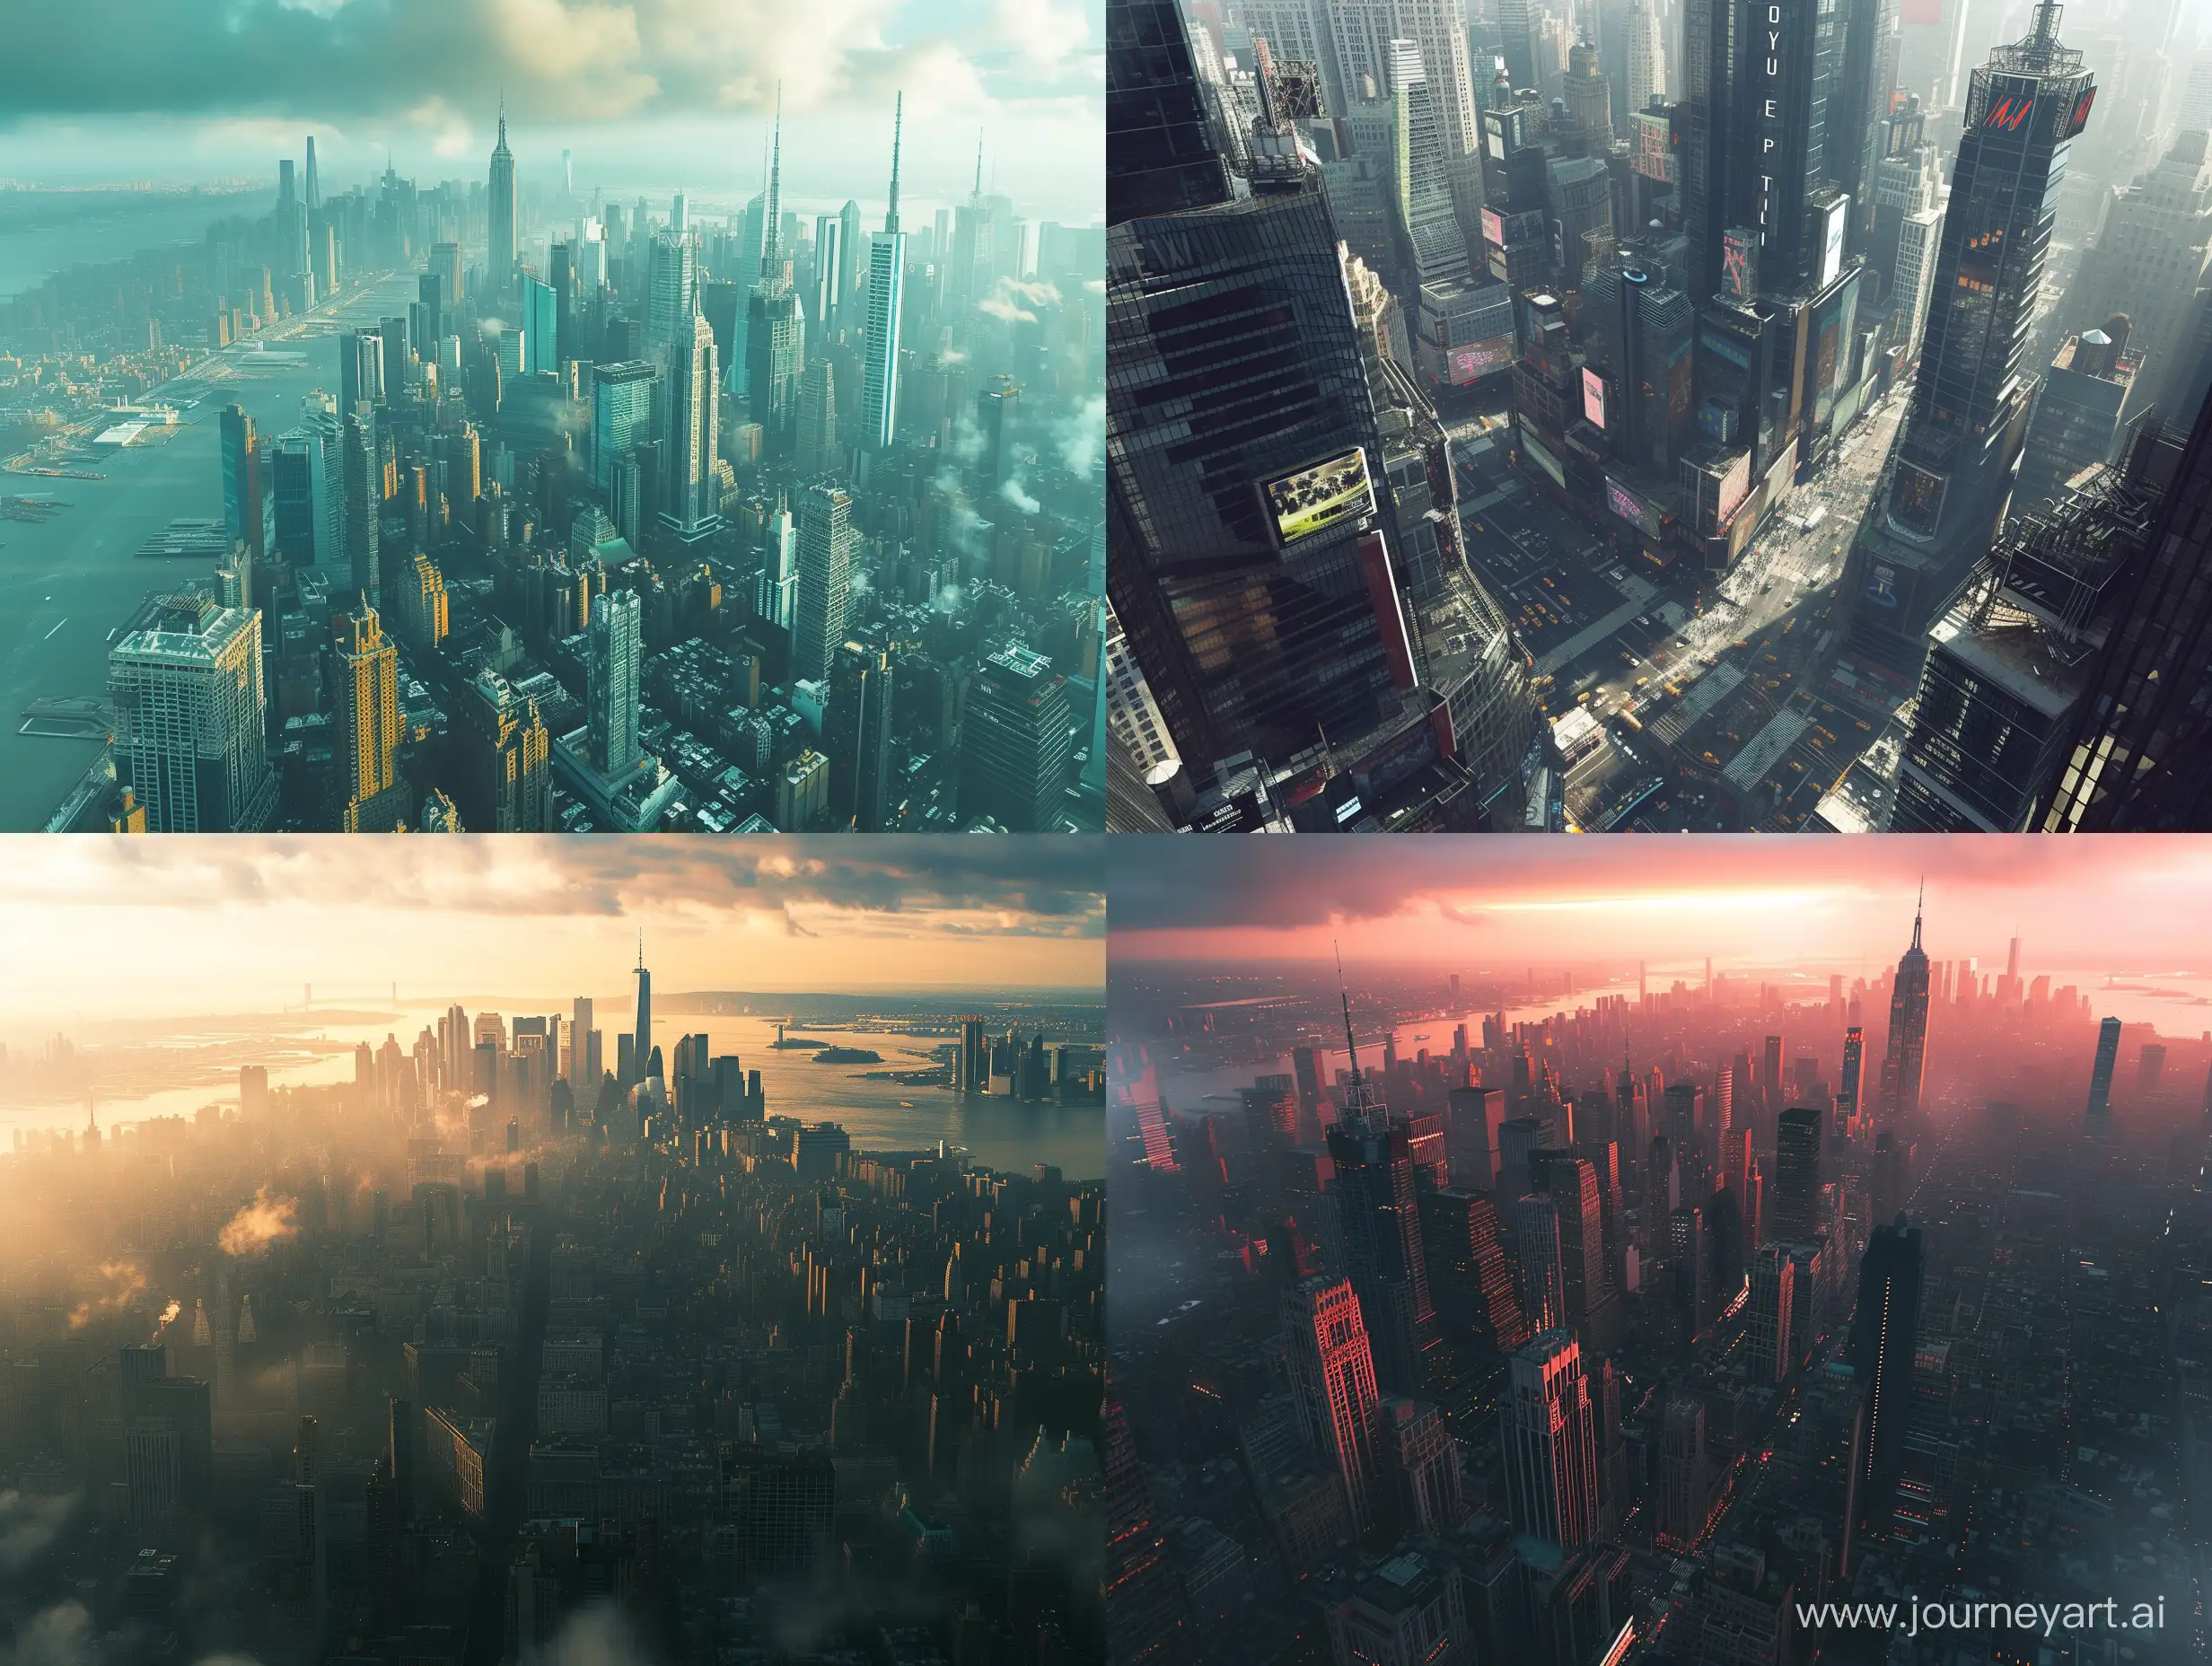 Futuristic-SciFi-New-York-Cityscape-Captured-in-Raw-Style-Aerial-Drone-View-2019